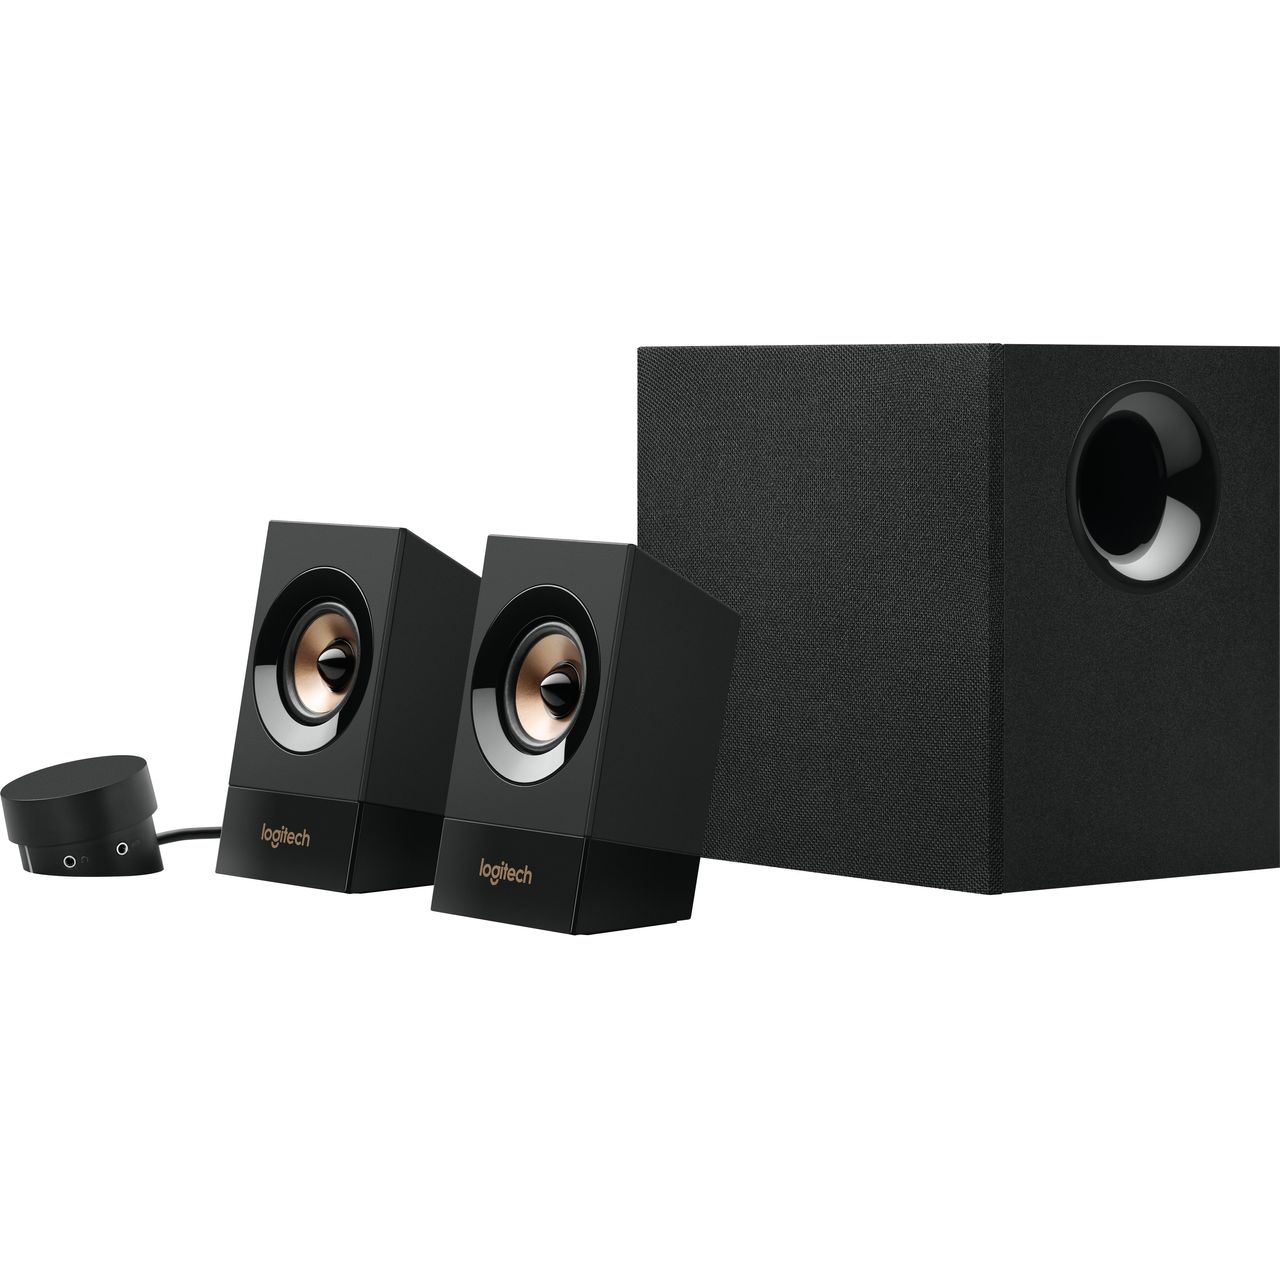 Logitech Z533 PC Speakers Review